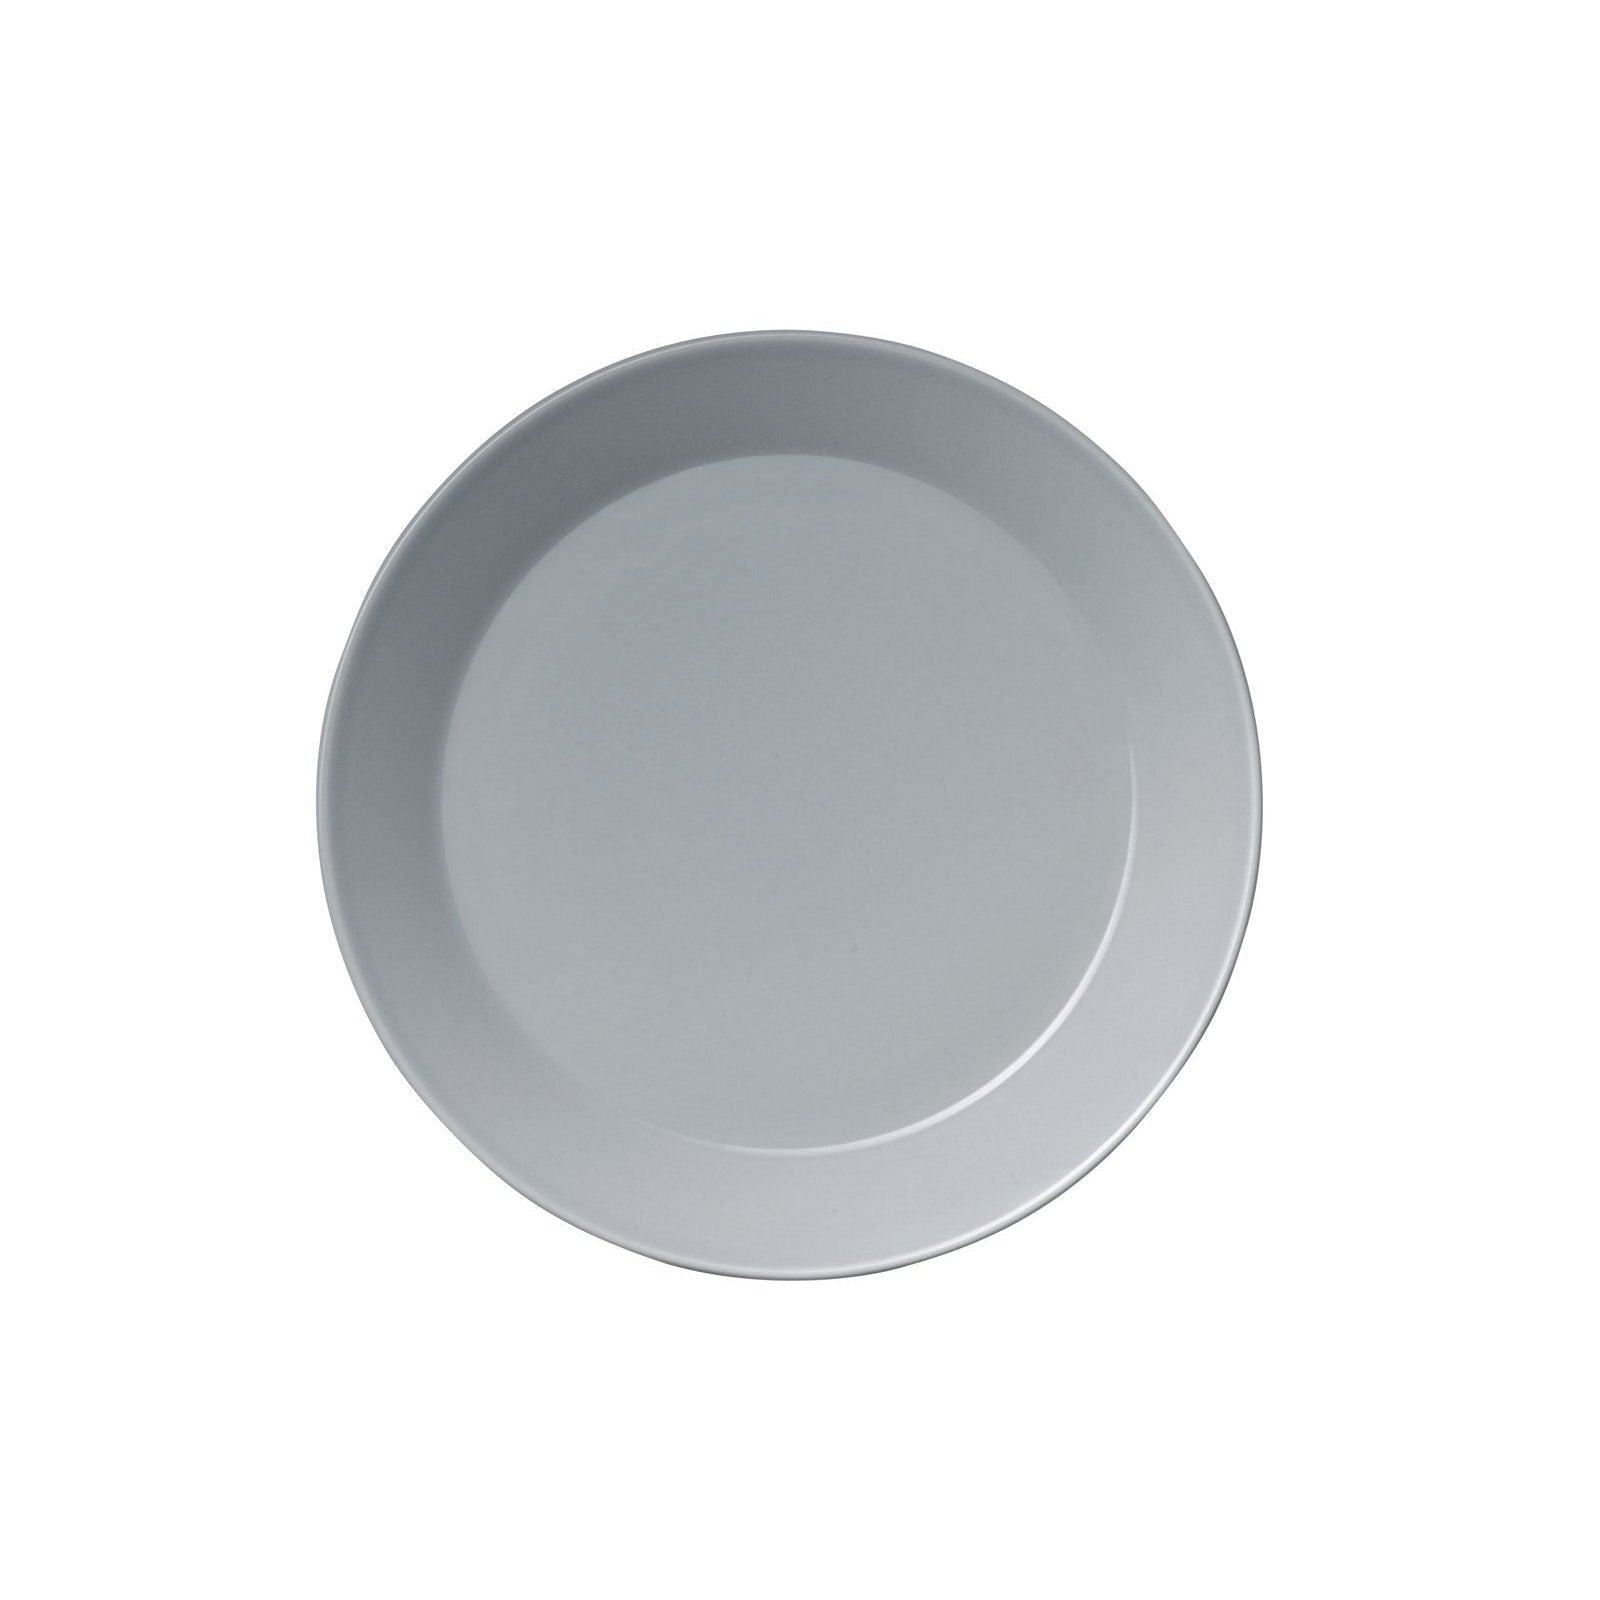 Piastra teema iittala grigio perla piatto, 26 cm